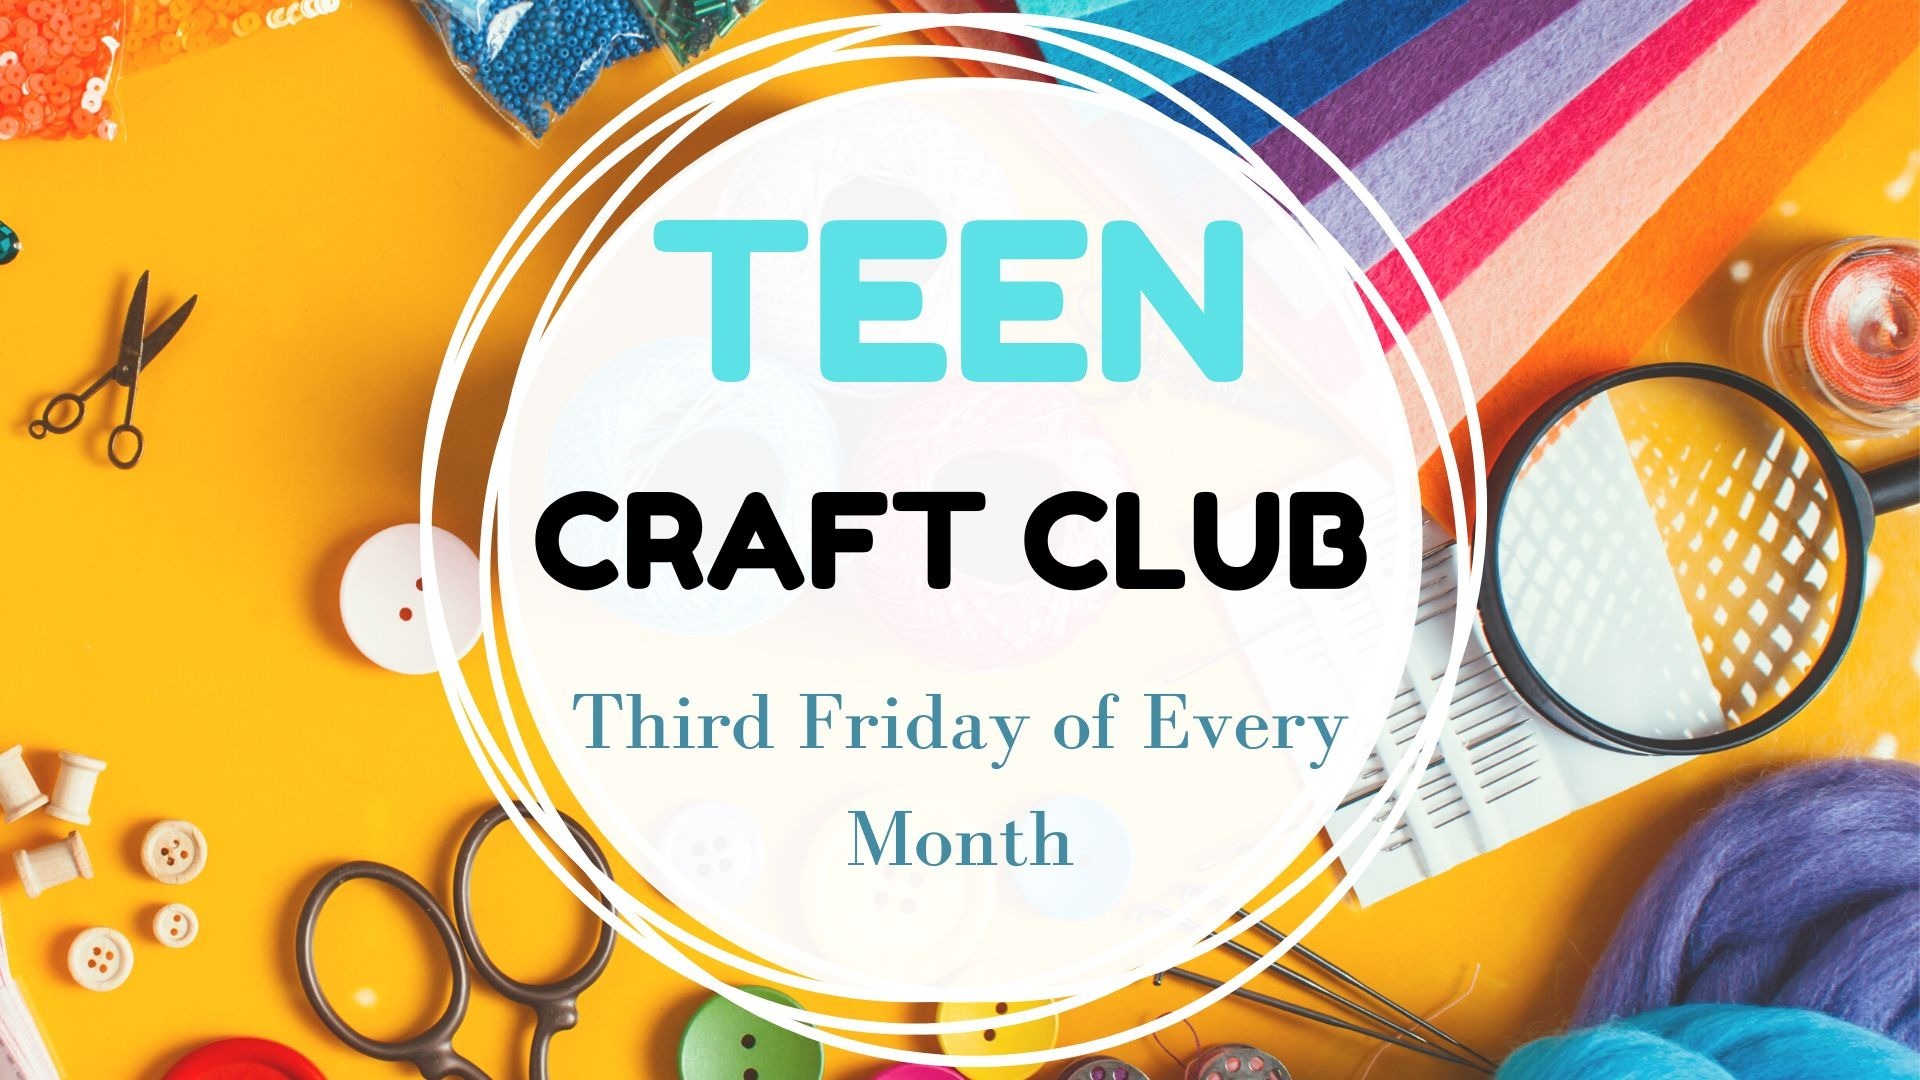 Teen Craft Club